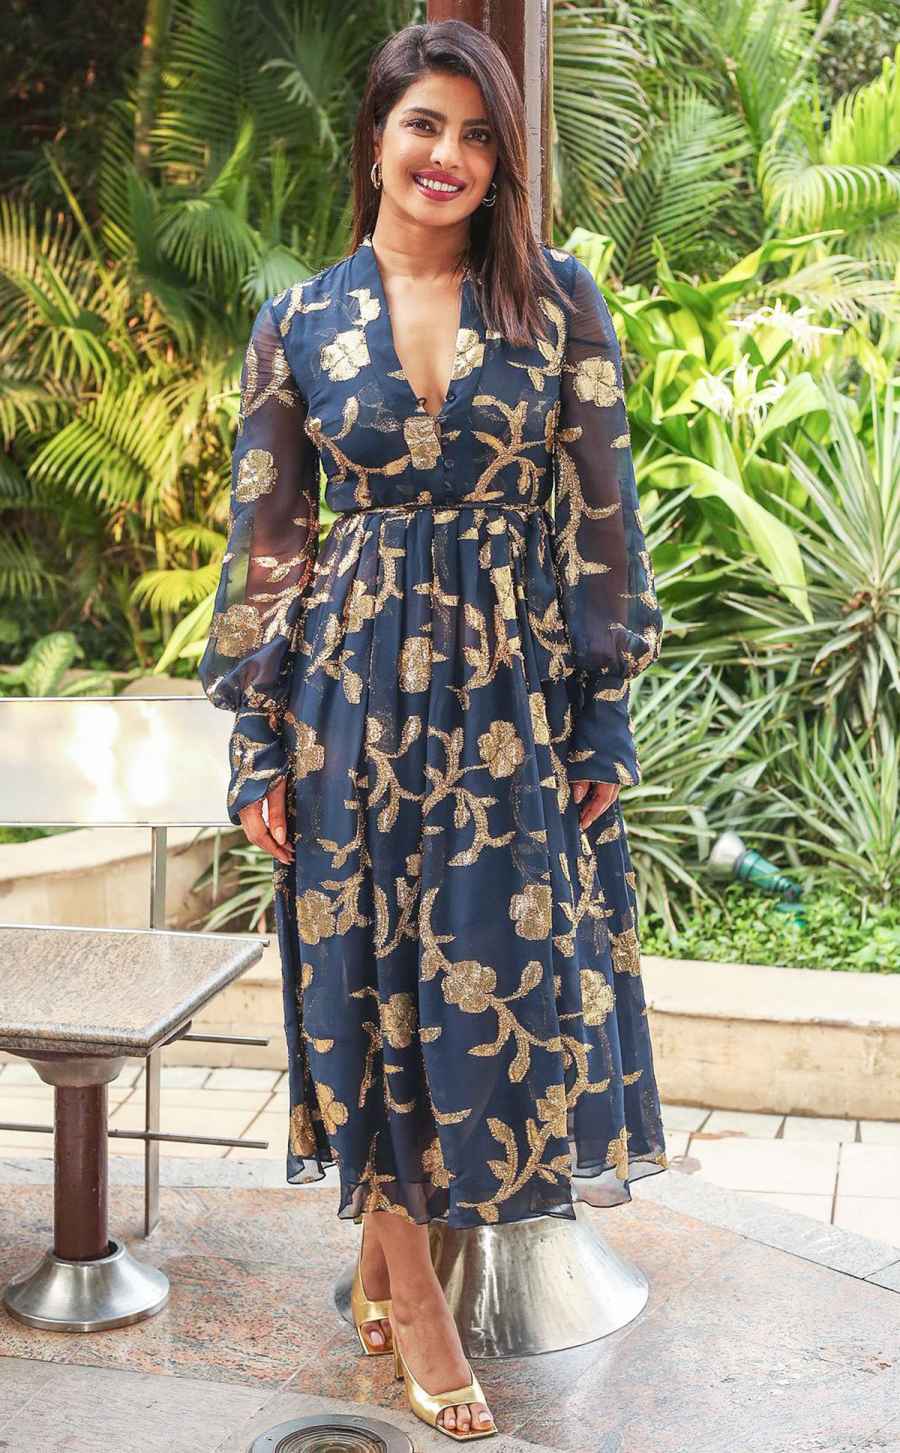 Priyanka Chopra Blue-Gold Dress October 24, 2019